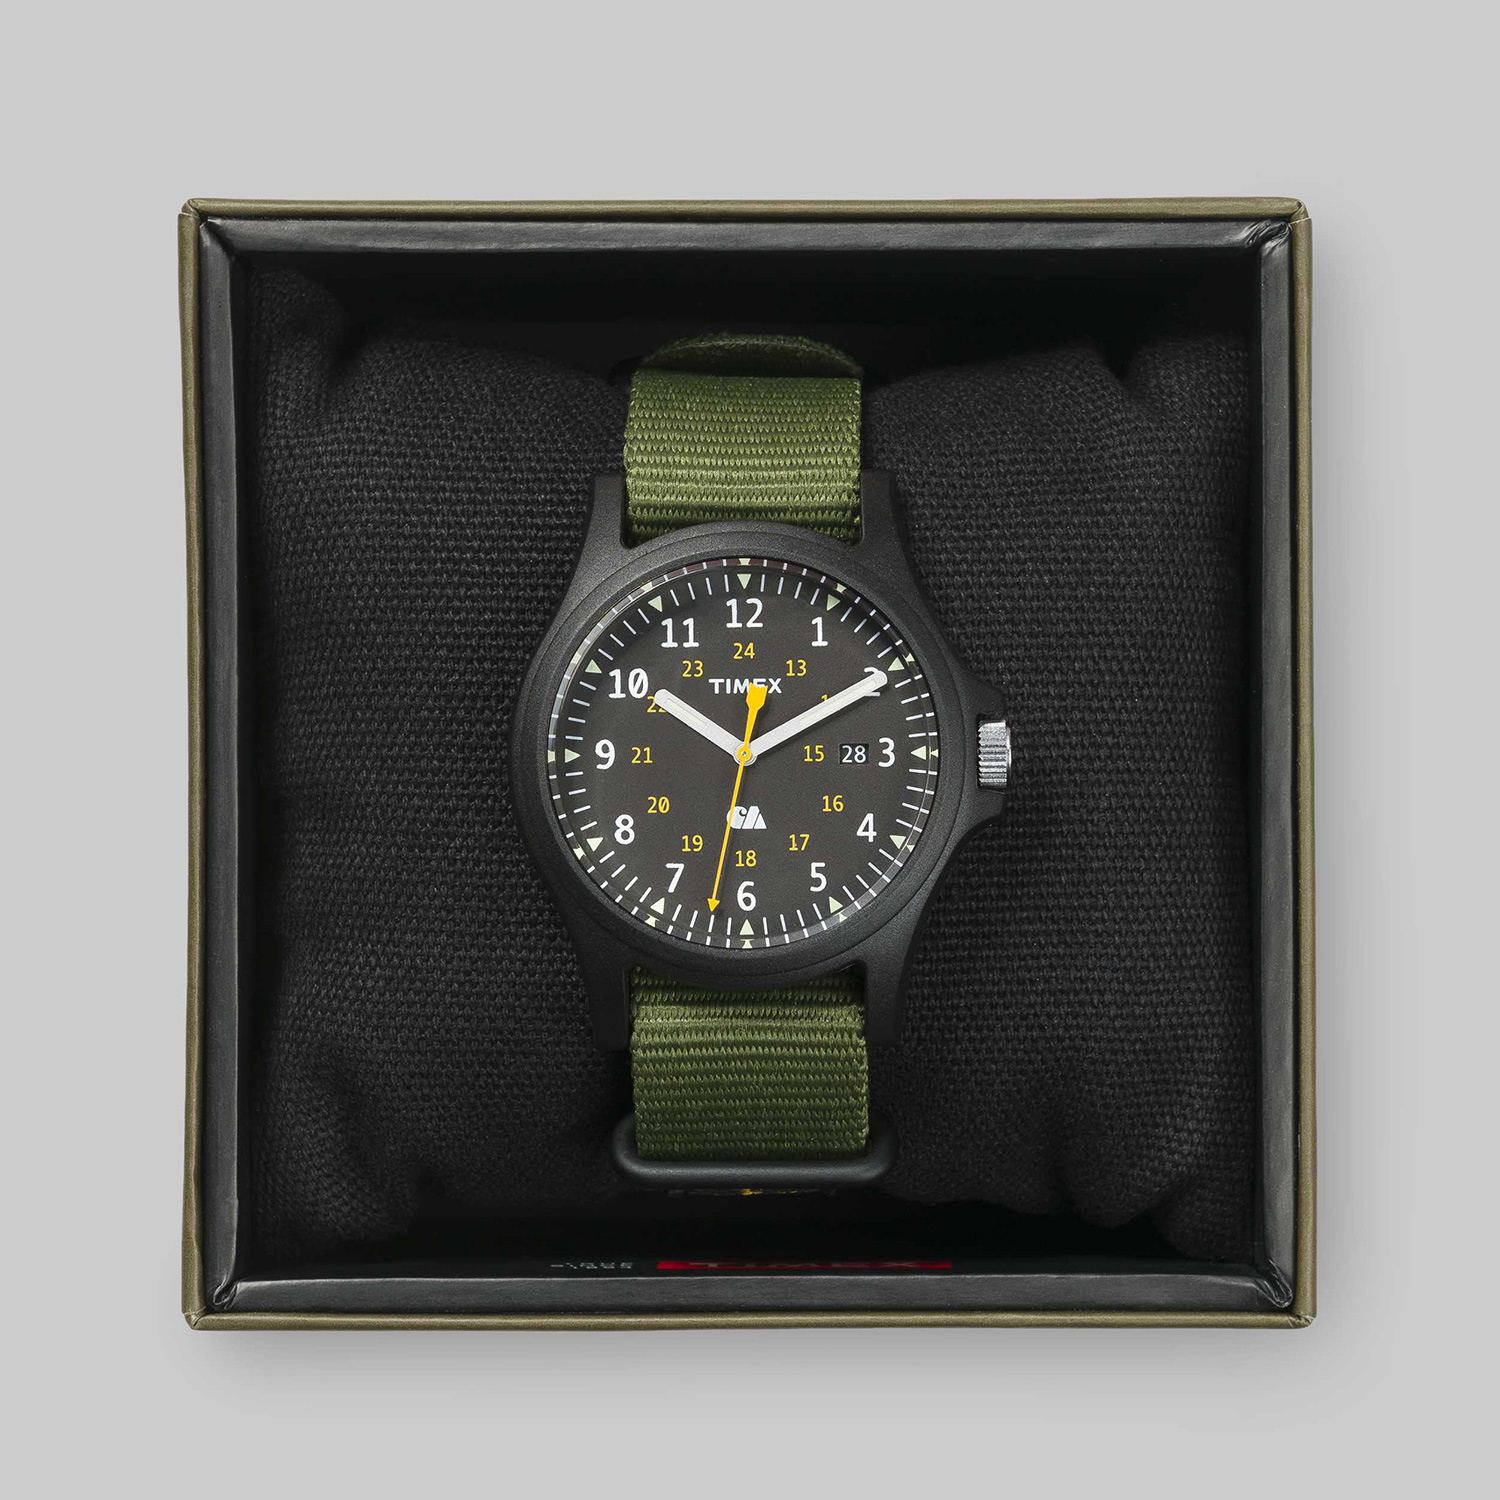 Carhartt WIP x Timex Watch - The Ultimate Timex Watch 